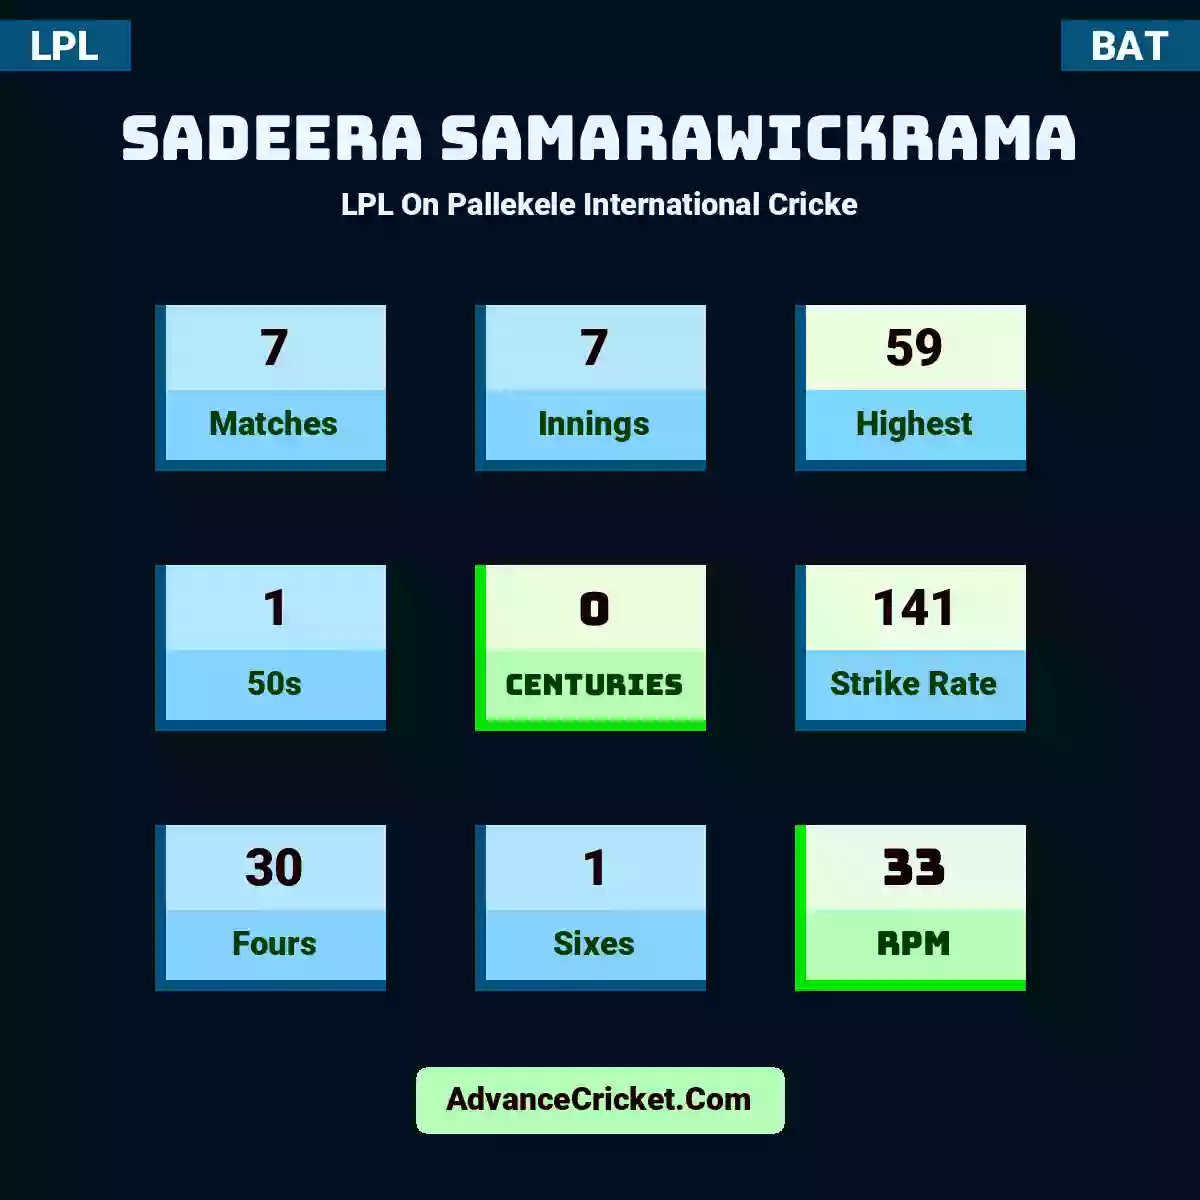 Sadeera Samarawickrama LPL  On Pallekele International Cricke, Sadeera Samarawickrama played 7 matches, scored 59 runs as highest, 1 half-centuries, and 0 centuries, with a strike rate of 141. S.Samarawickrama hit 30 fours and 1 sixes, with an RPM of 33.